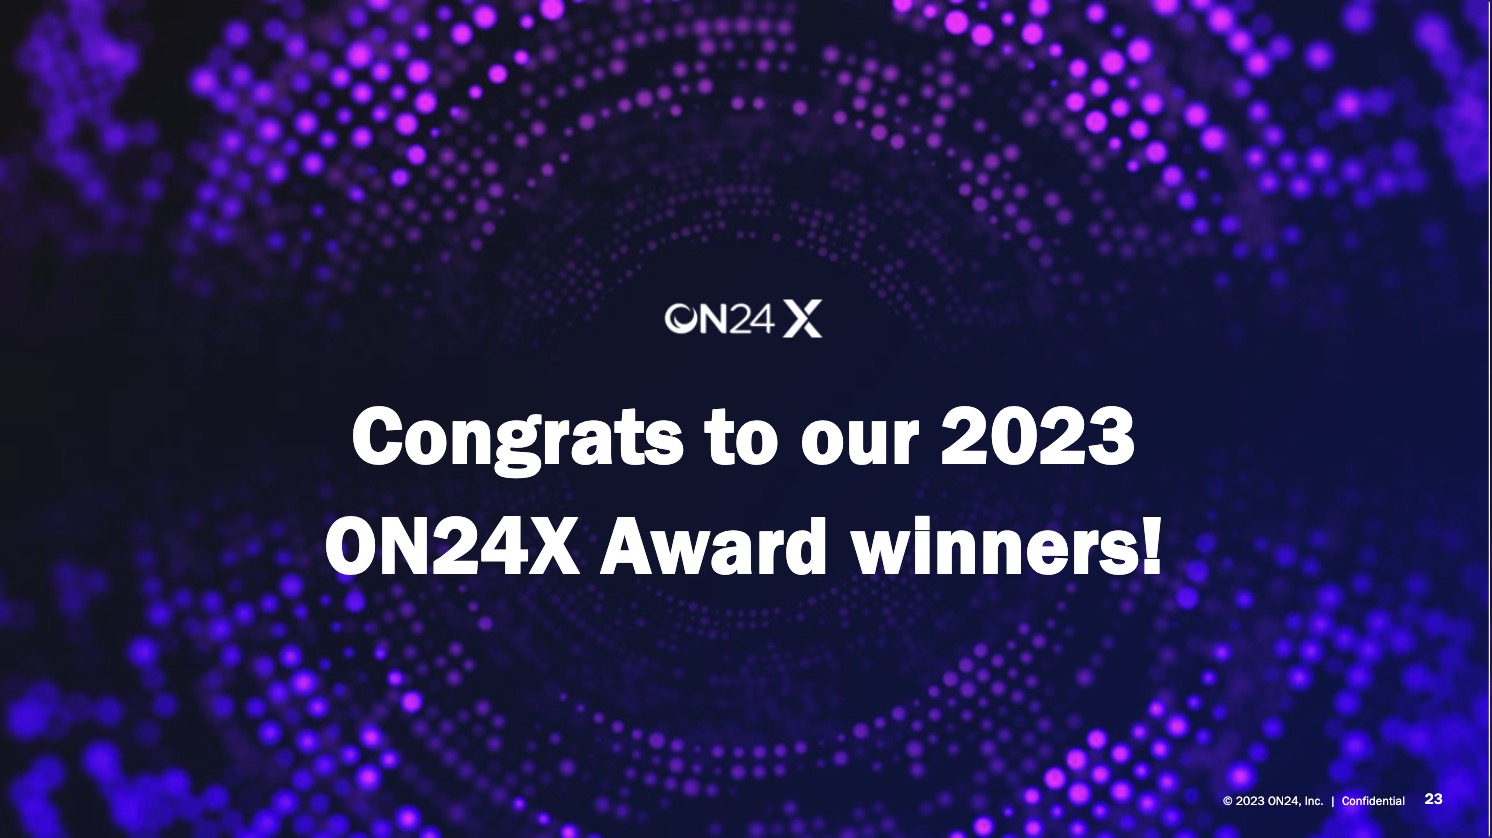 ON24X Award Winners 2023